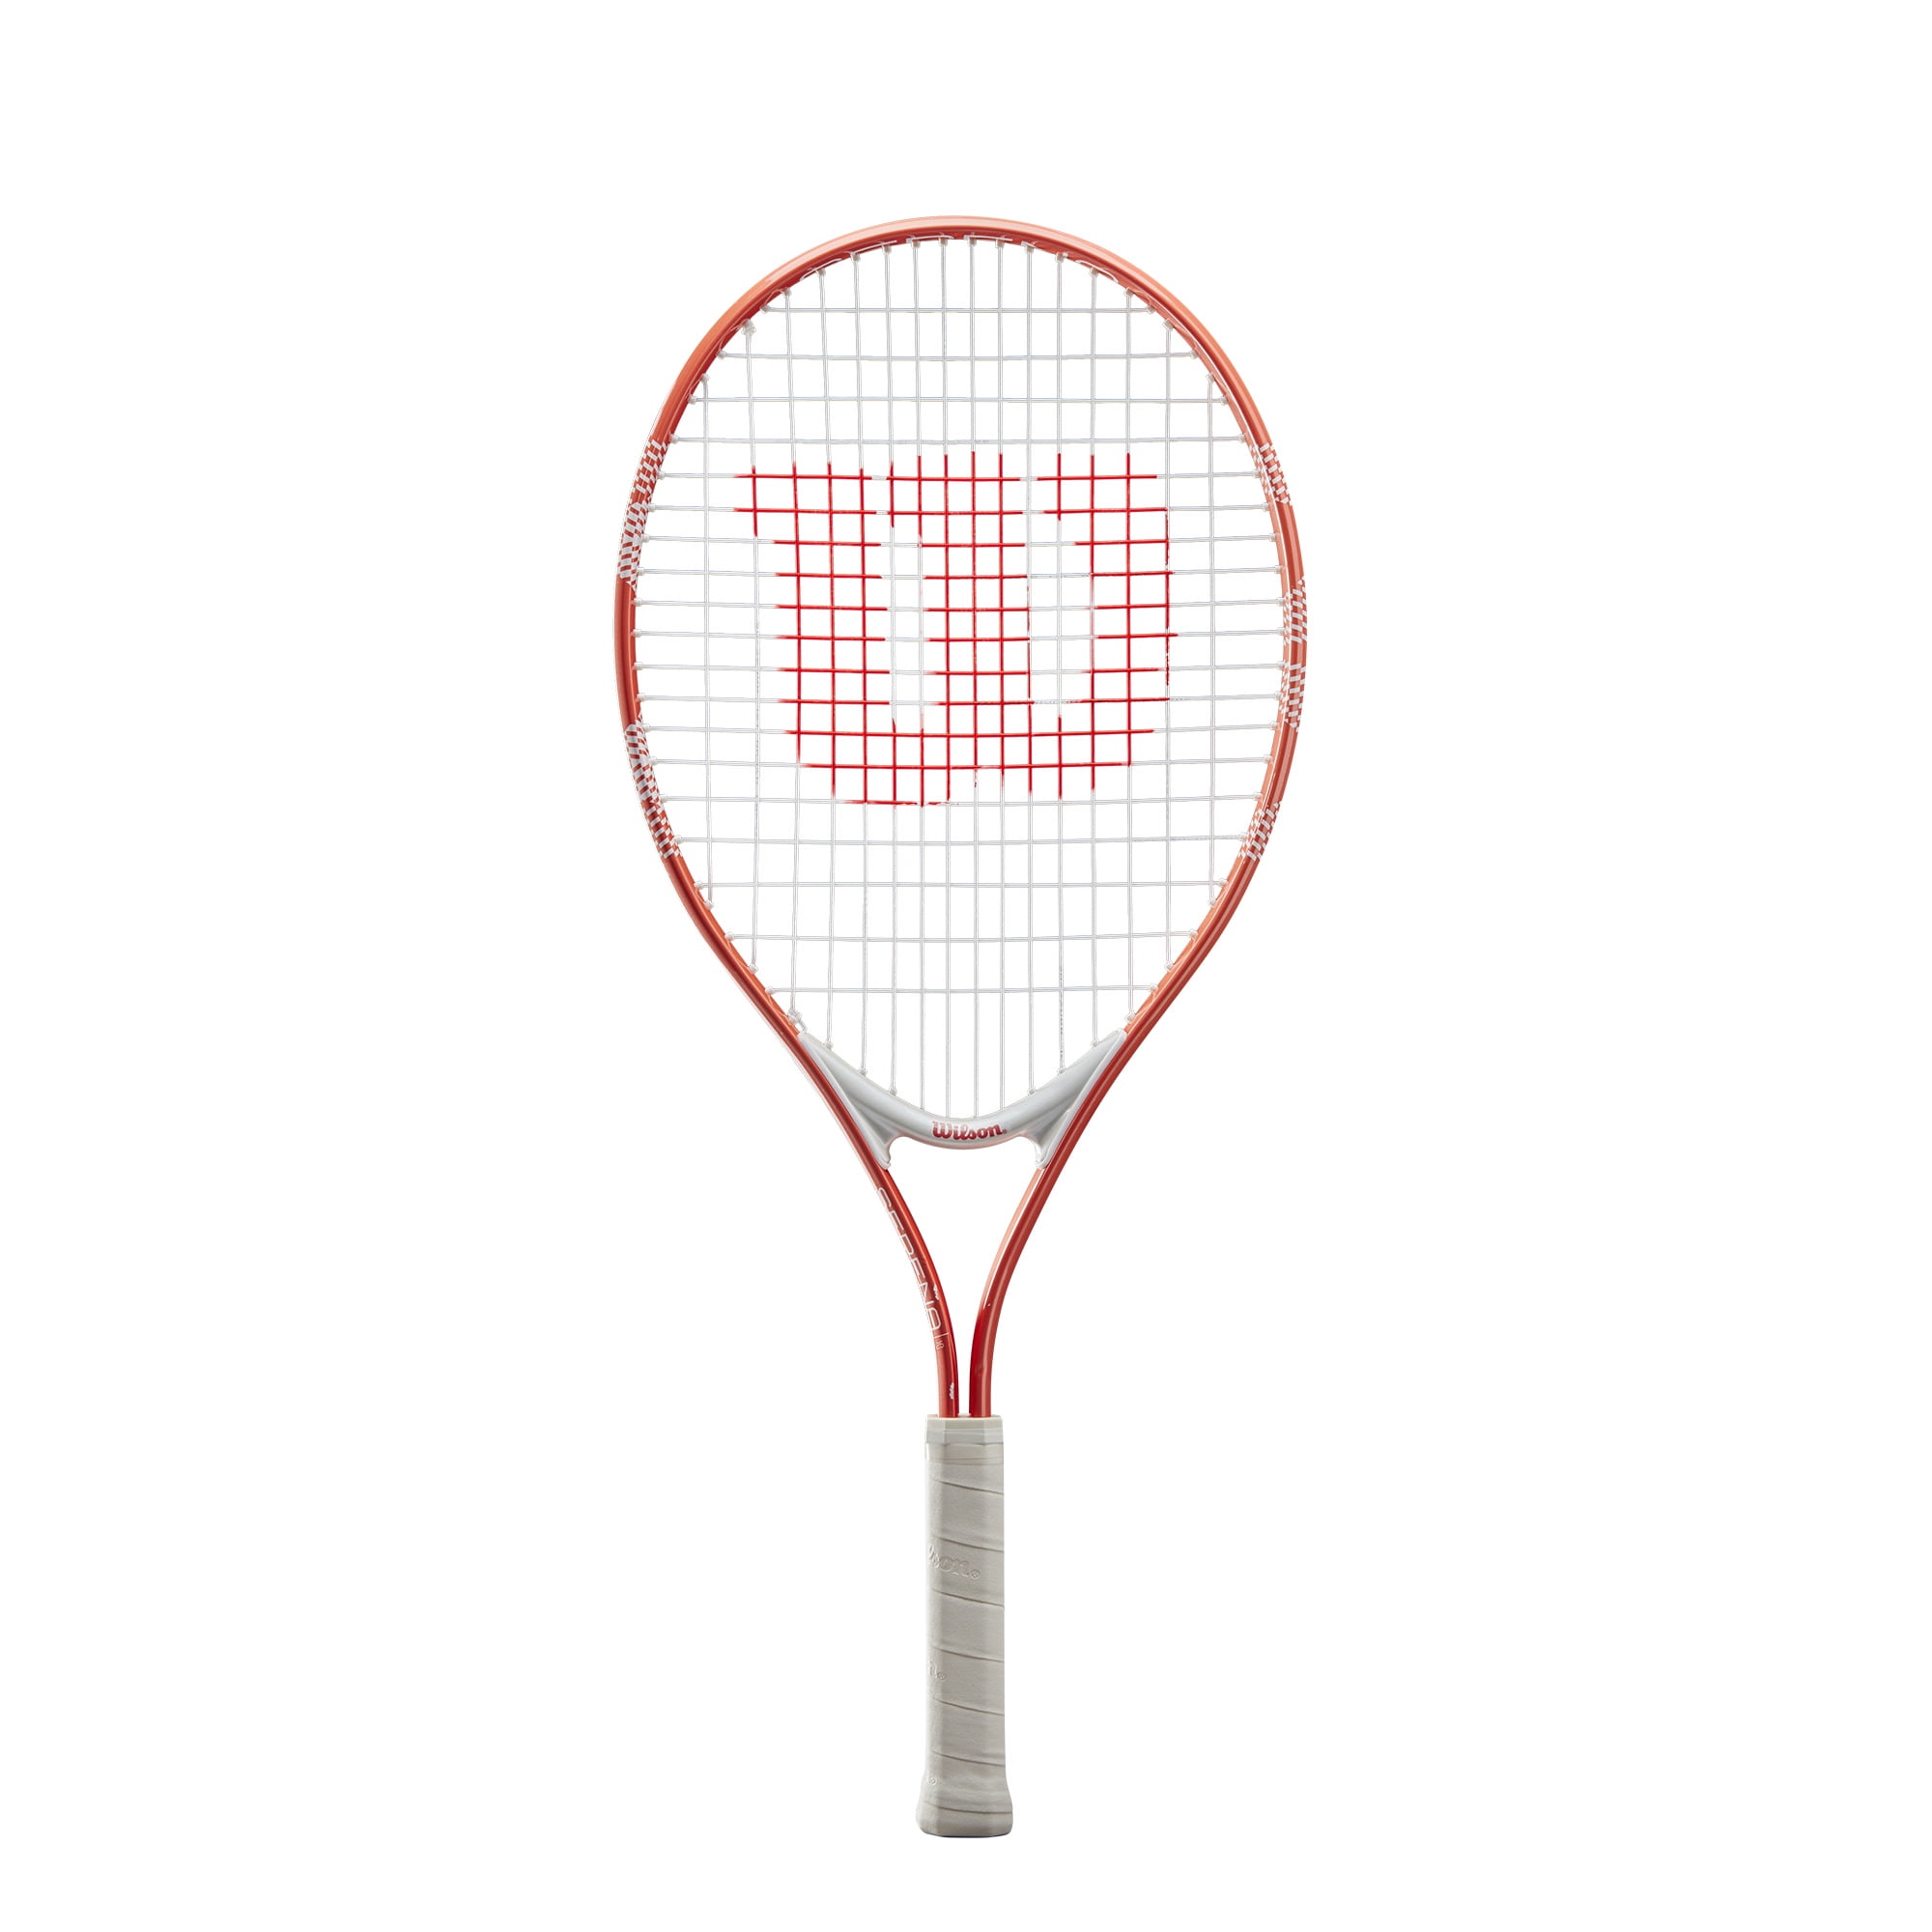 Wilson Impact Tennis Racquet for sale online 